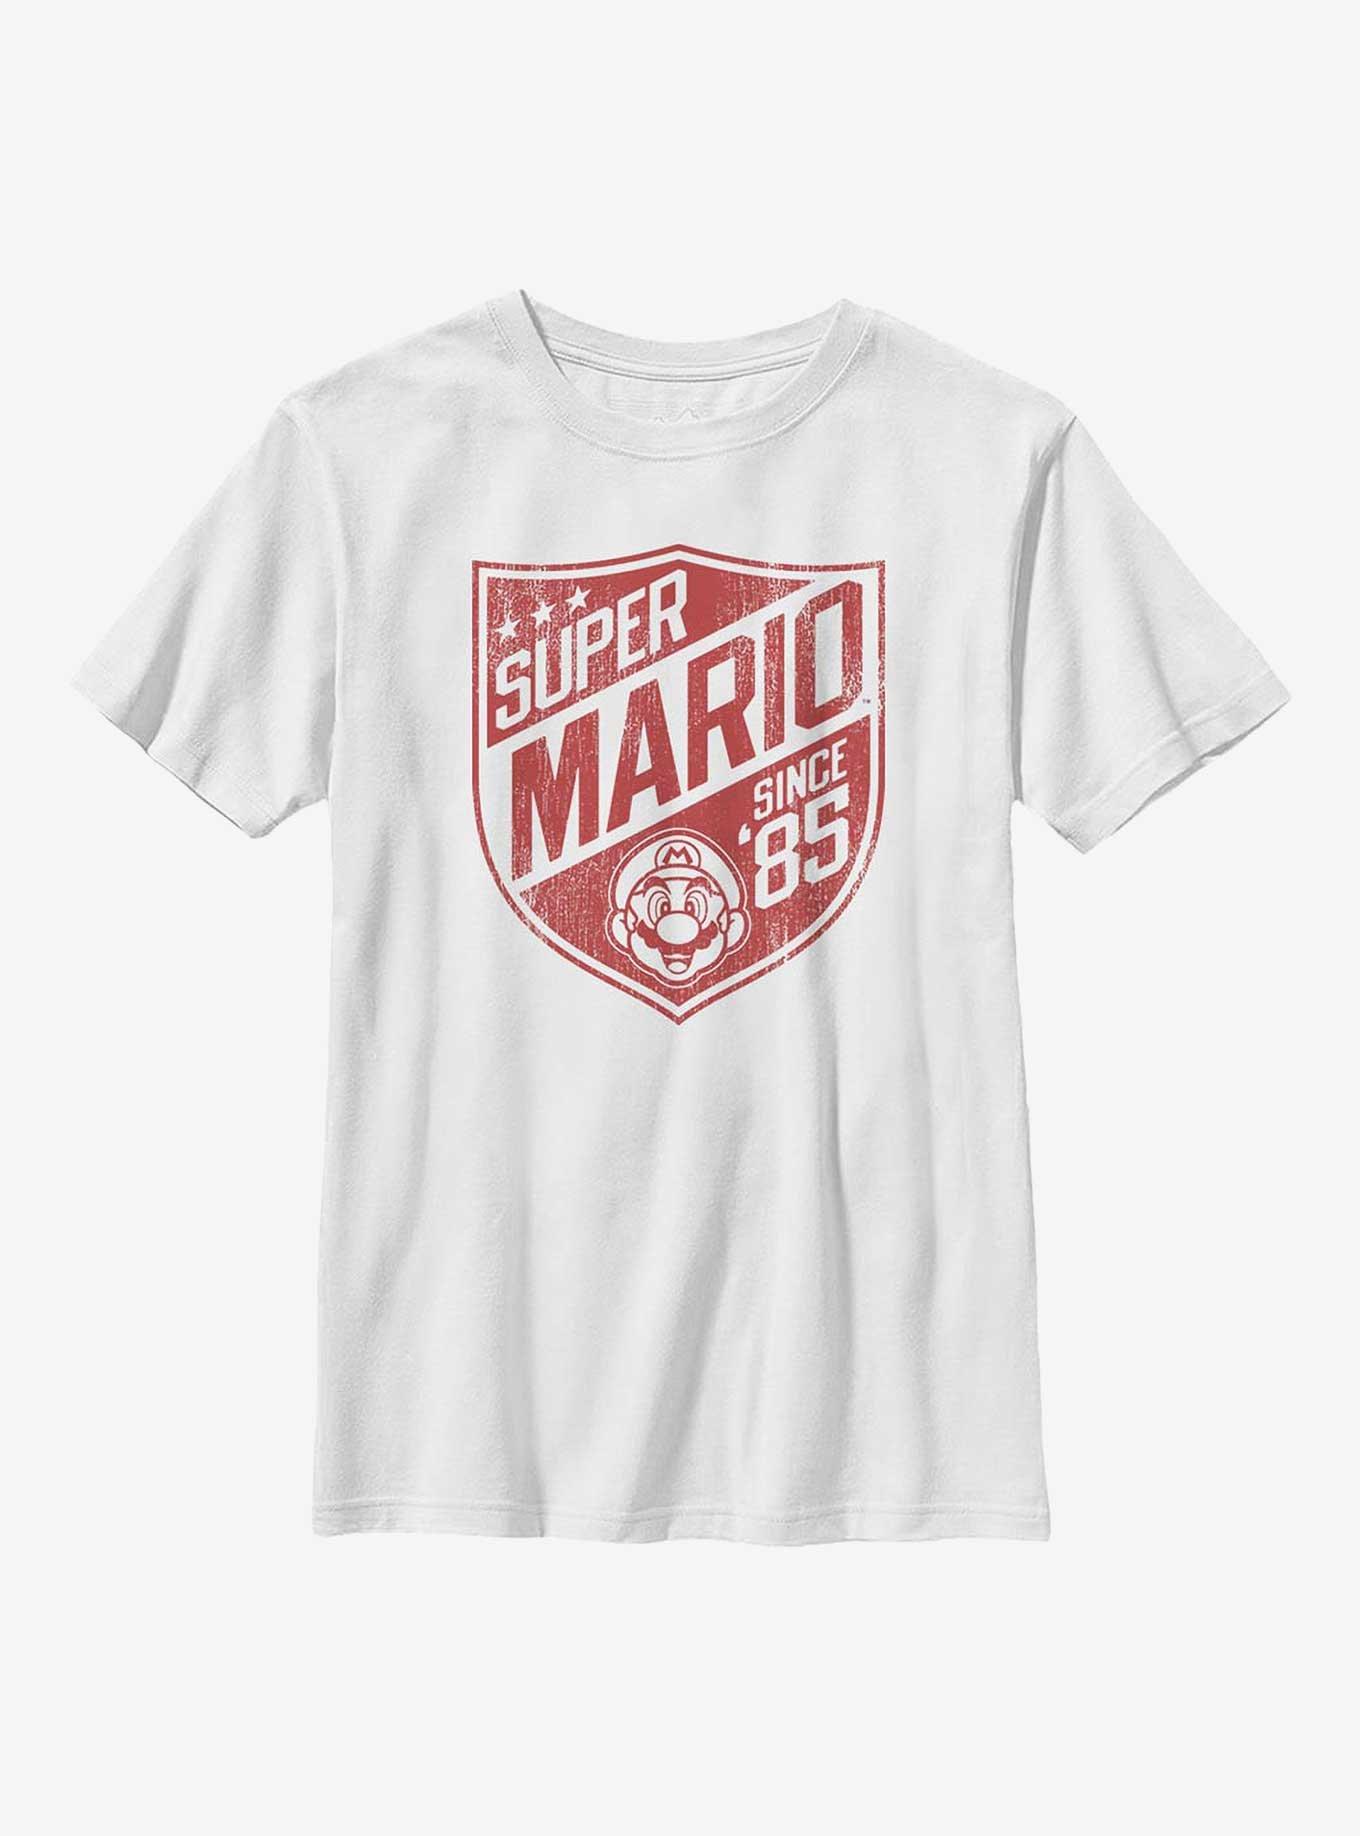 Nintendo Mario Super Mario '85 Youth T-Shirt, WHITE, hi-res